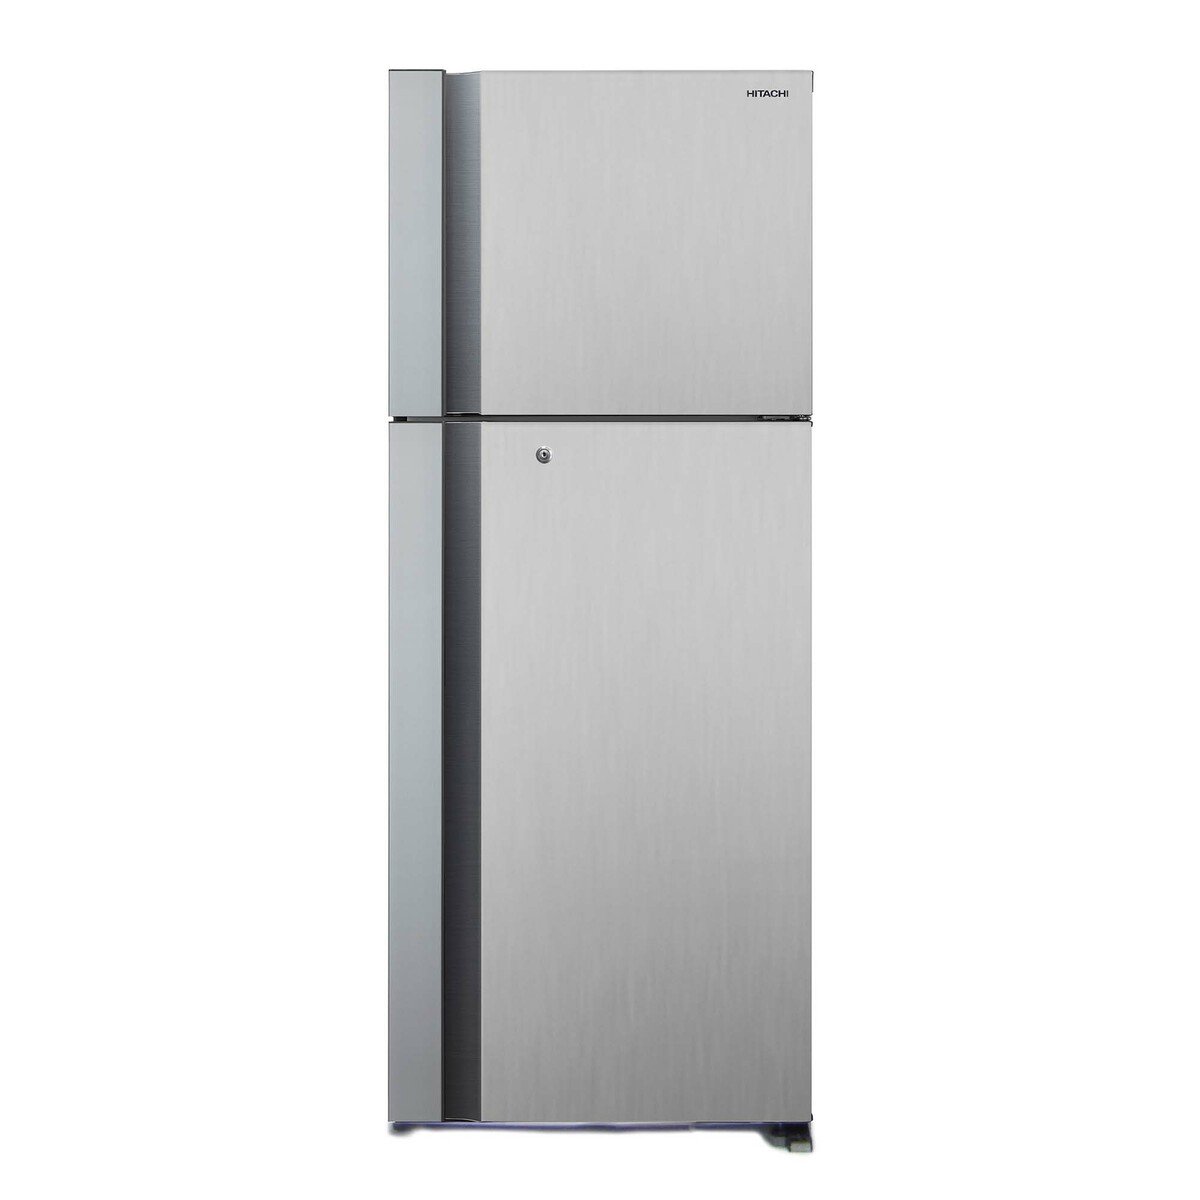 Hitachi Double Door Refrigerator RV655PUKOKPSV 650Ltr